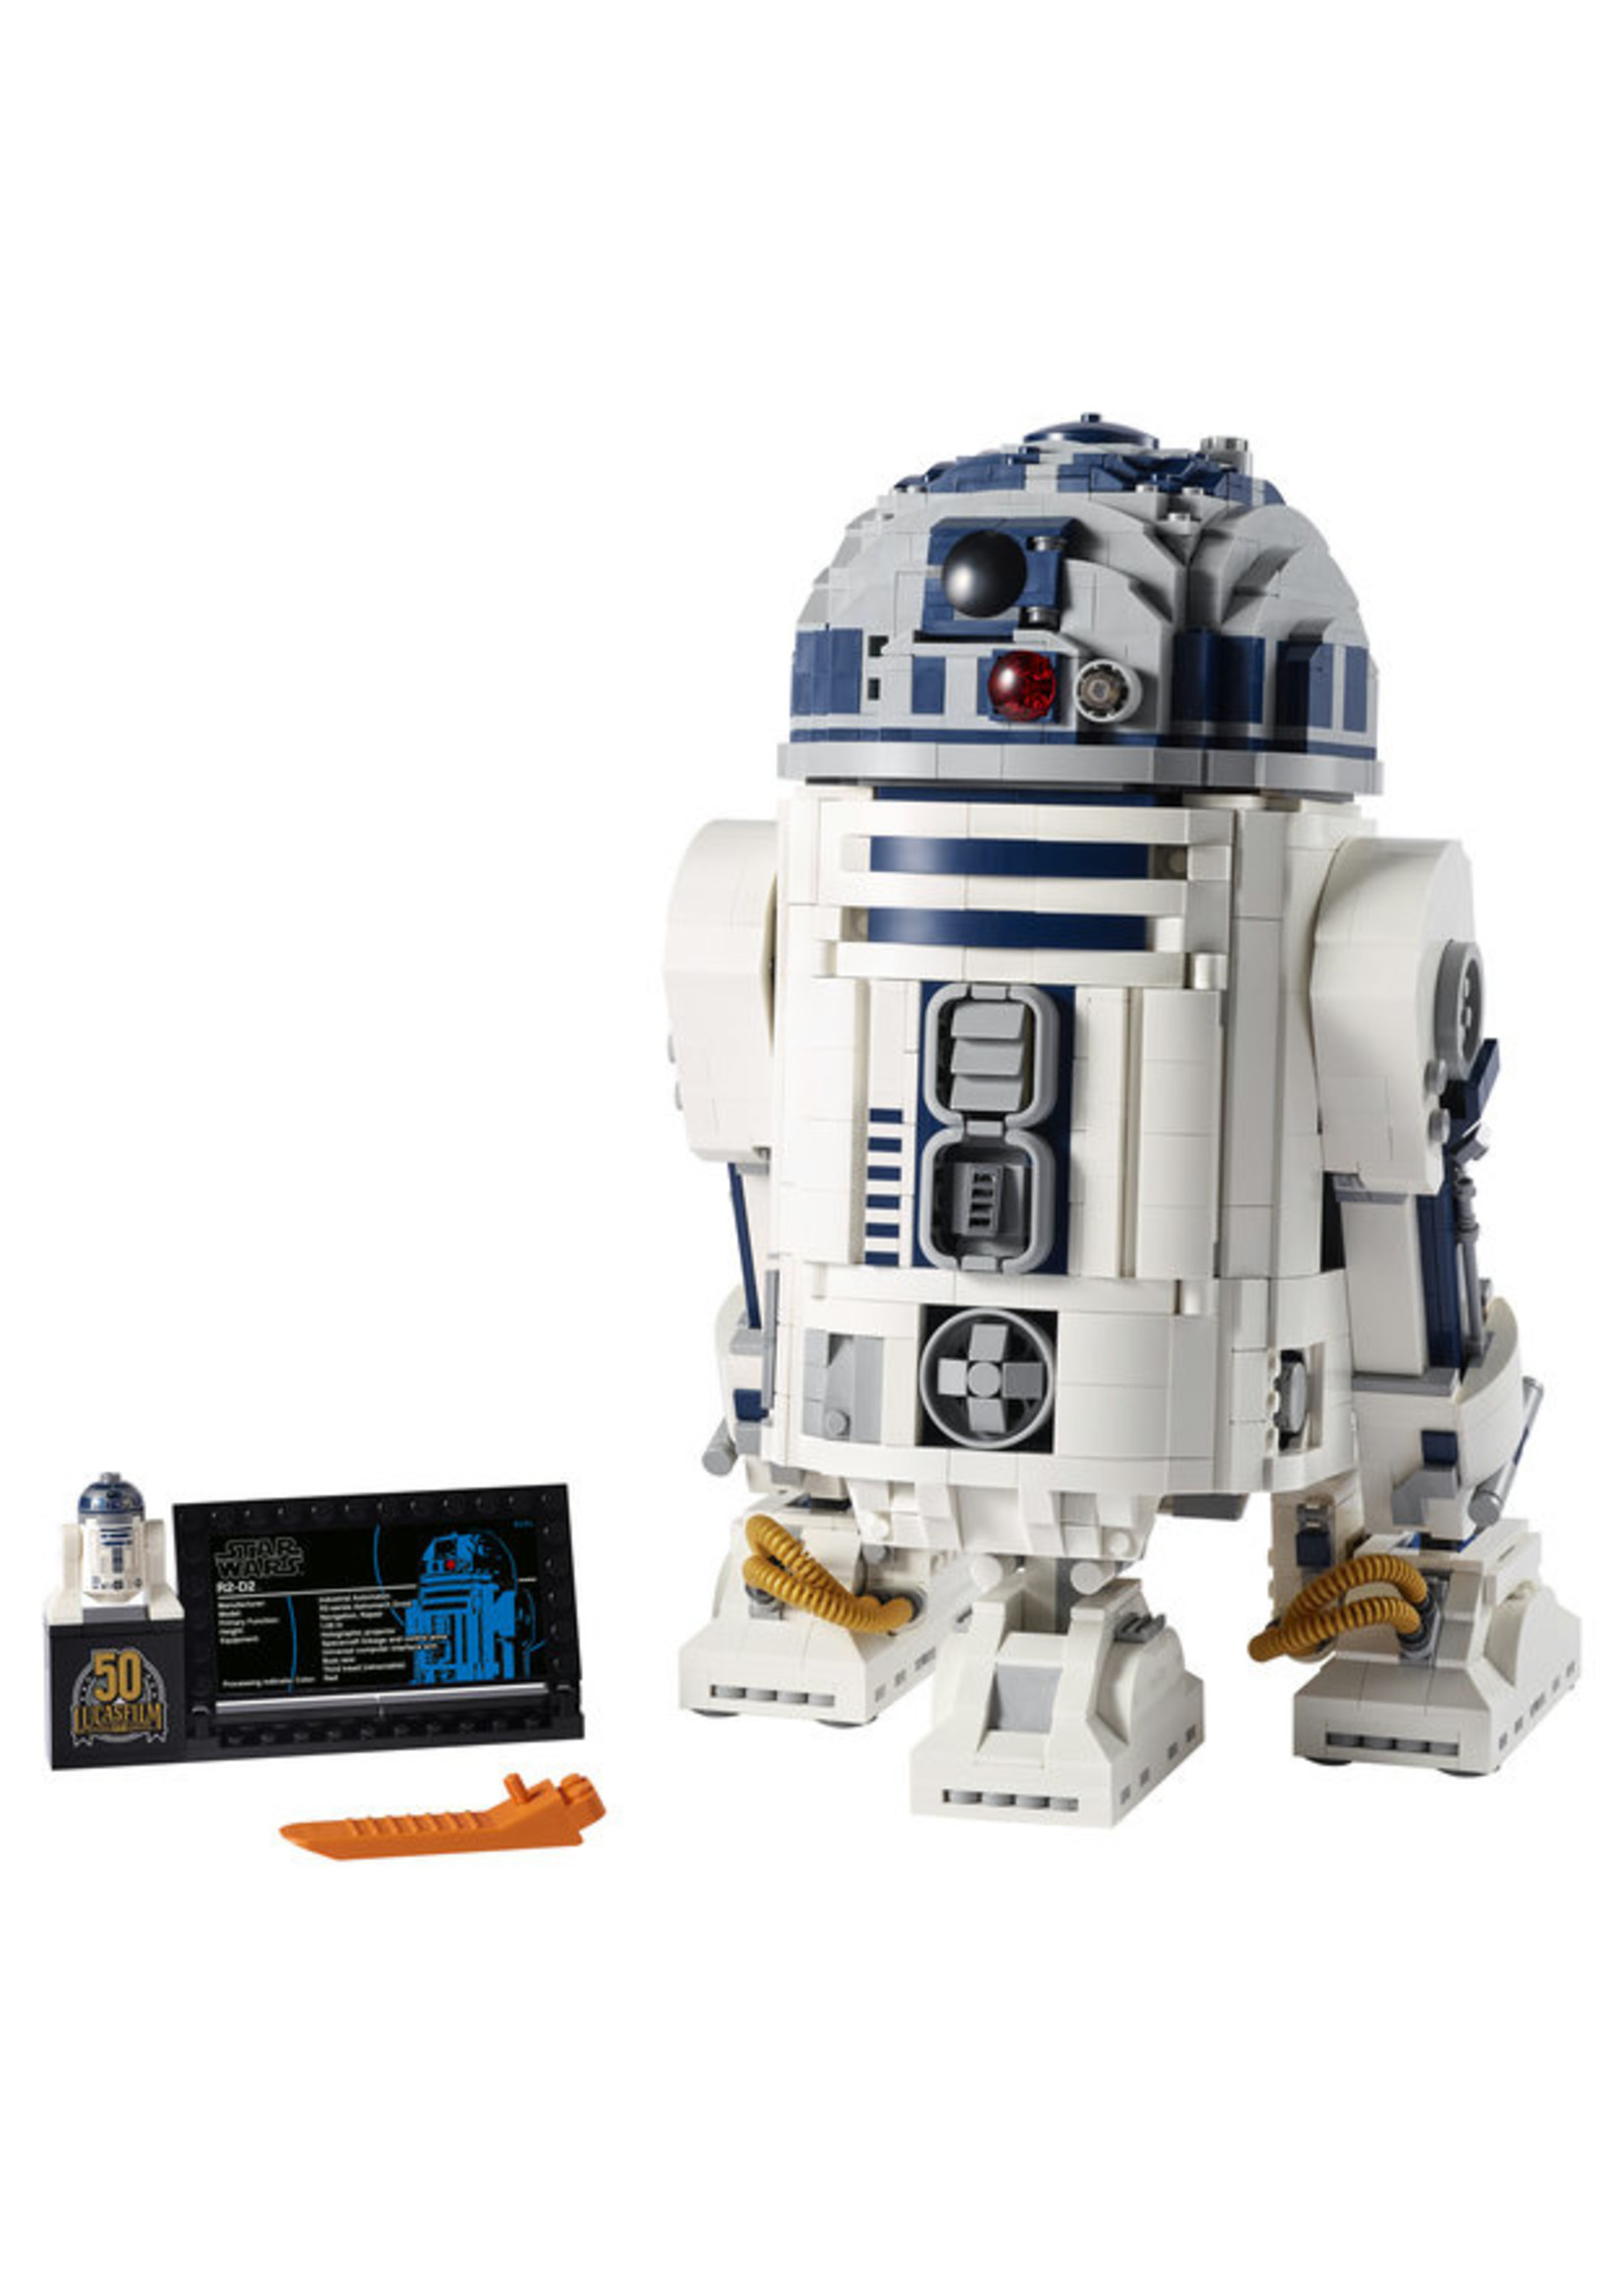 LEGO 75308 - R2-D2